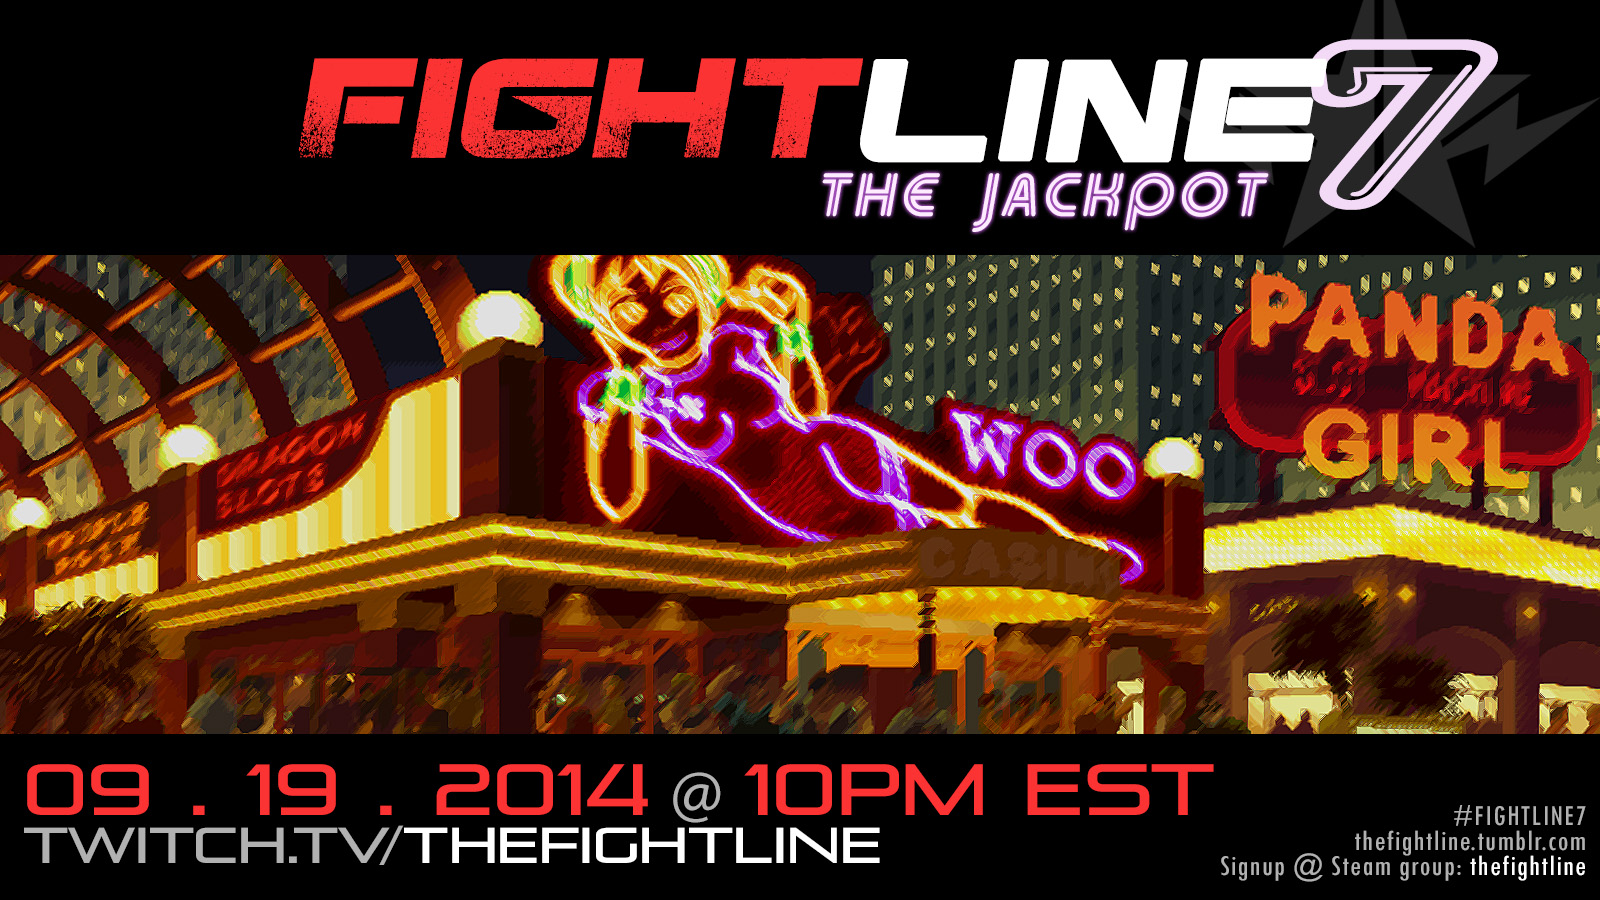 [IMAGE] Fightline 7 Promo